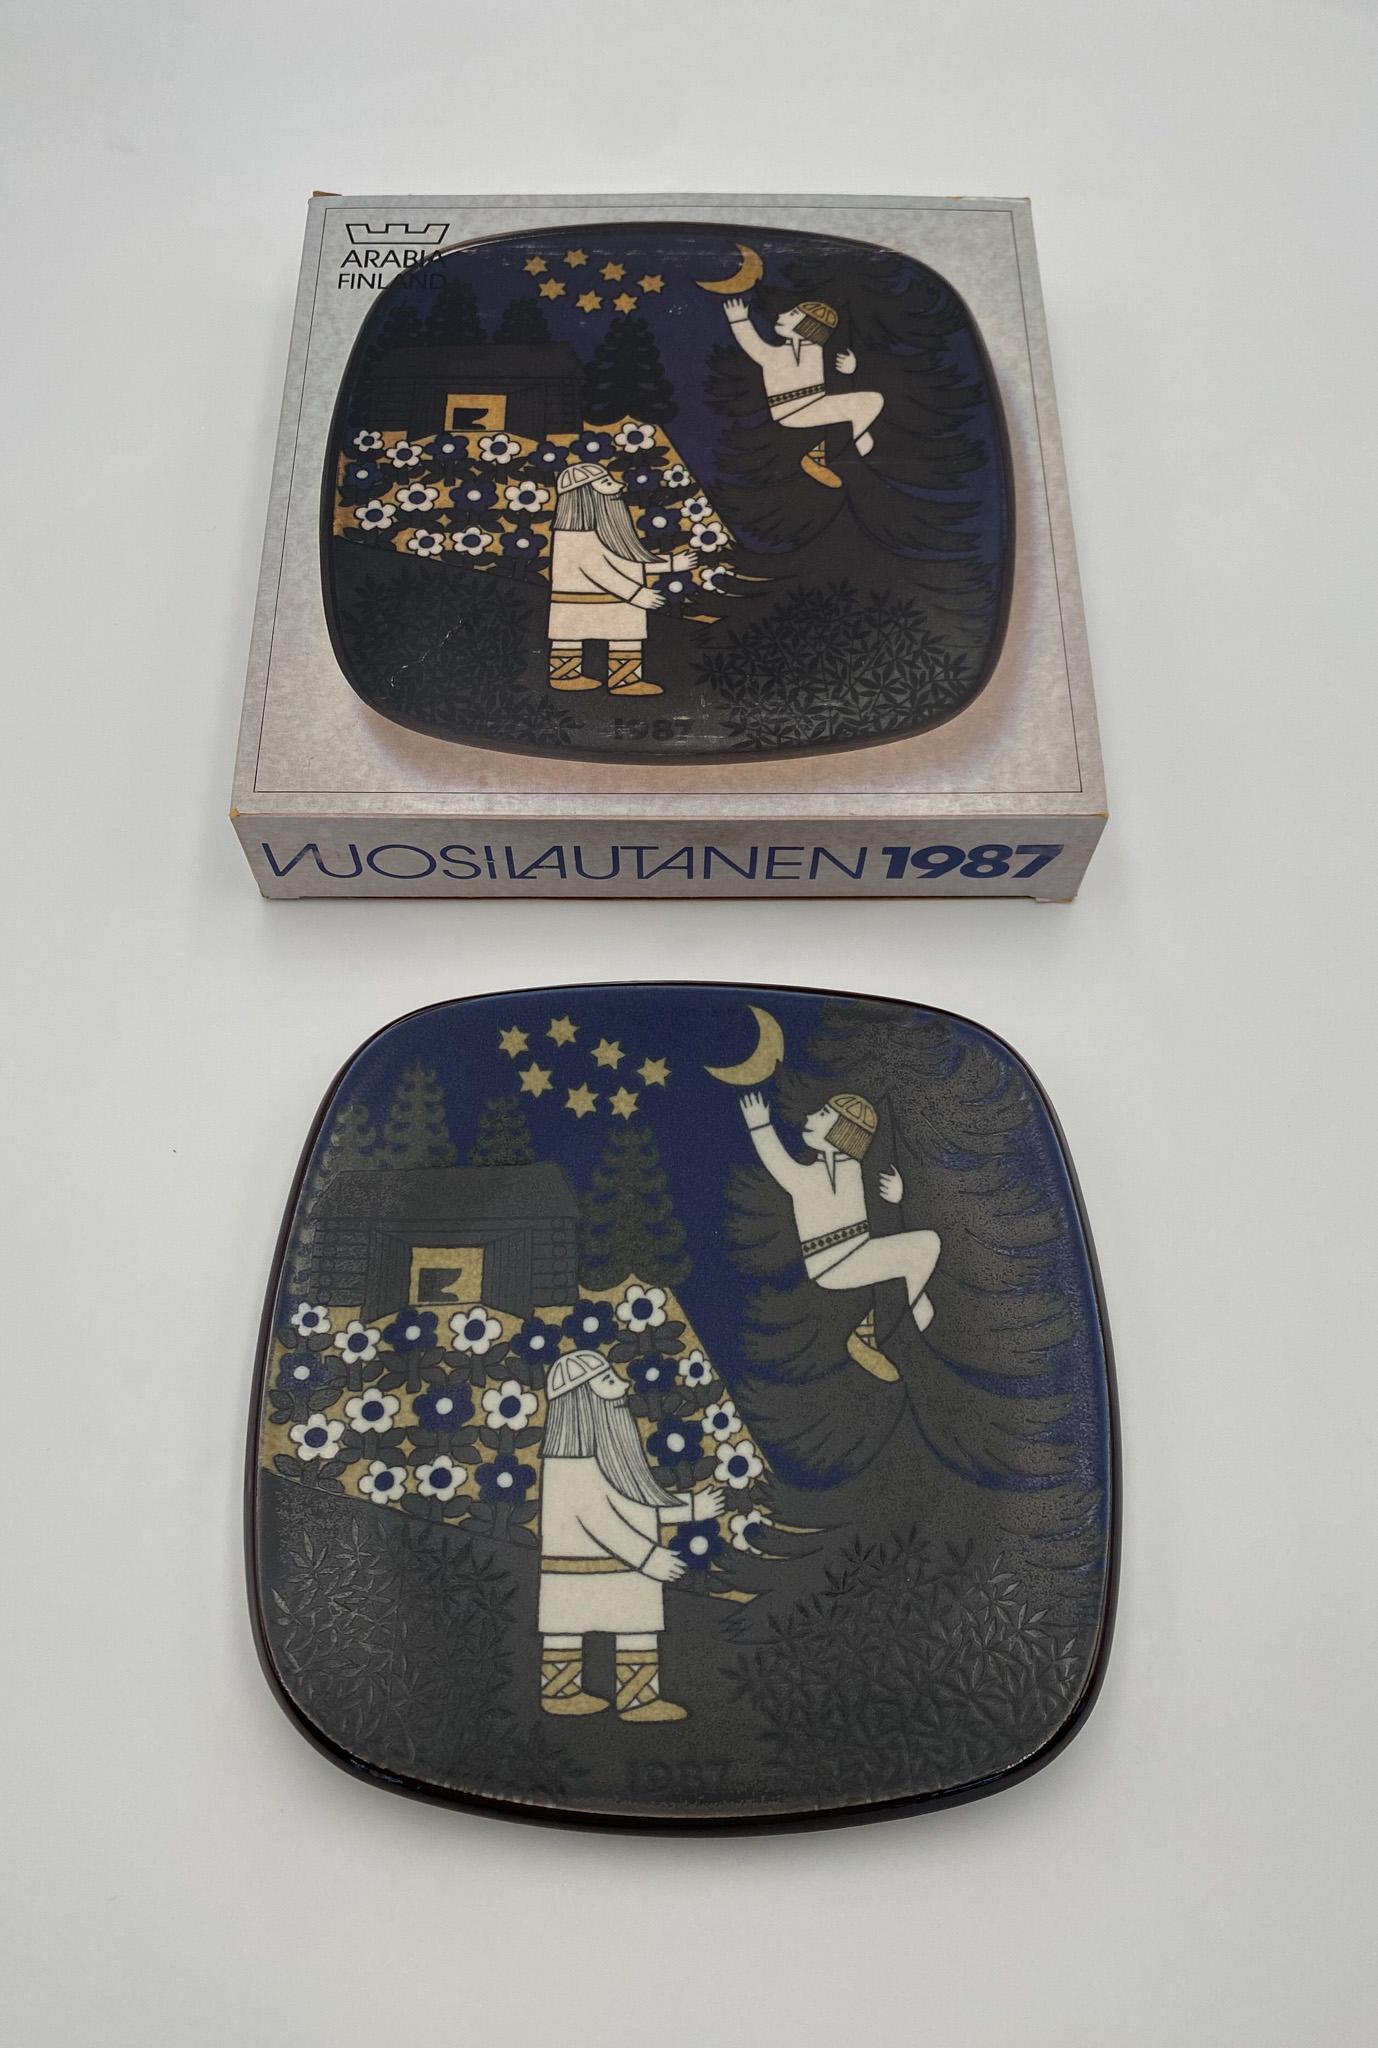 Raija Uosikkinen Decorative Plate for Arabia of Finland, 1987.  Retains the original box.  